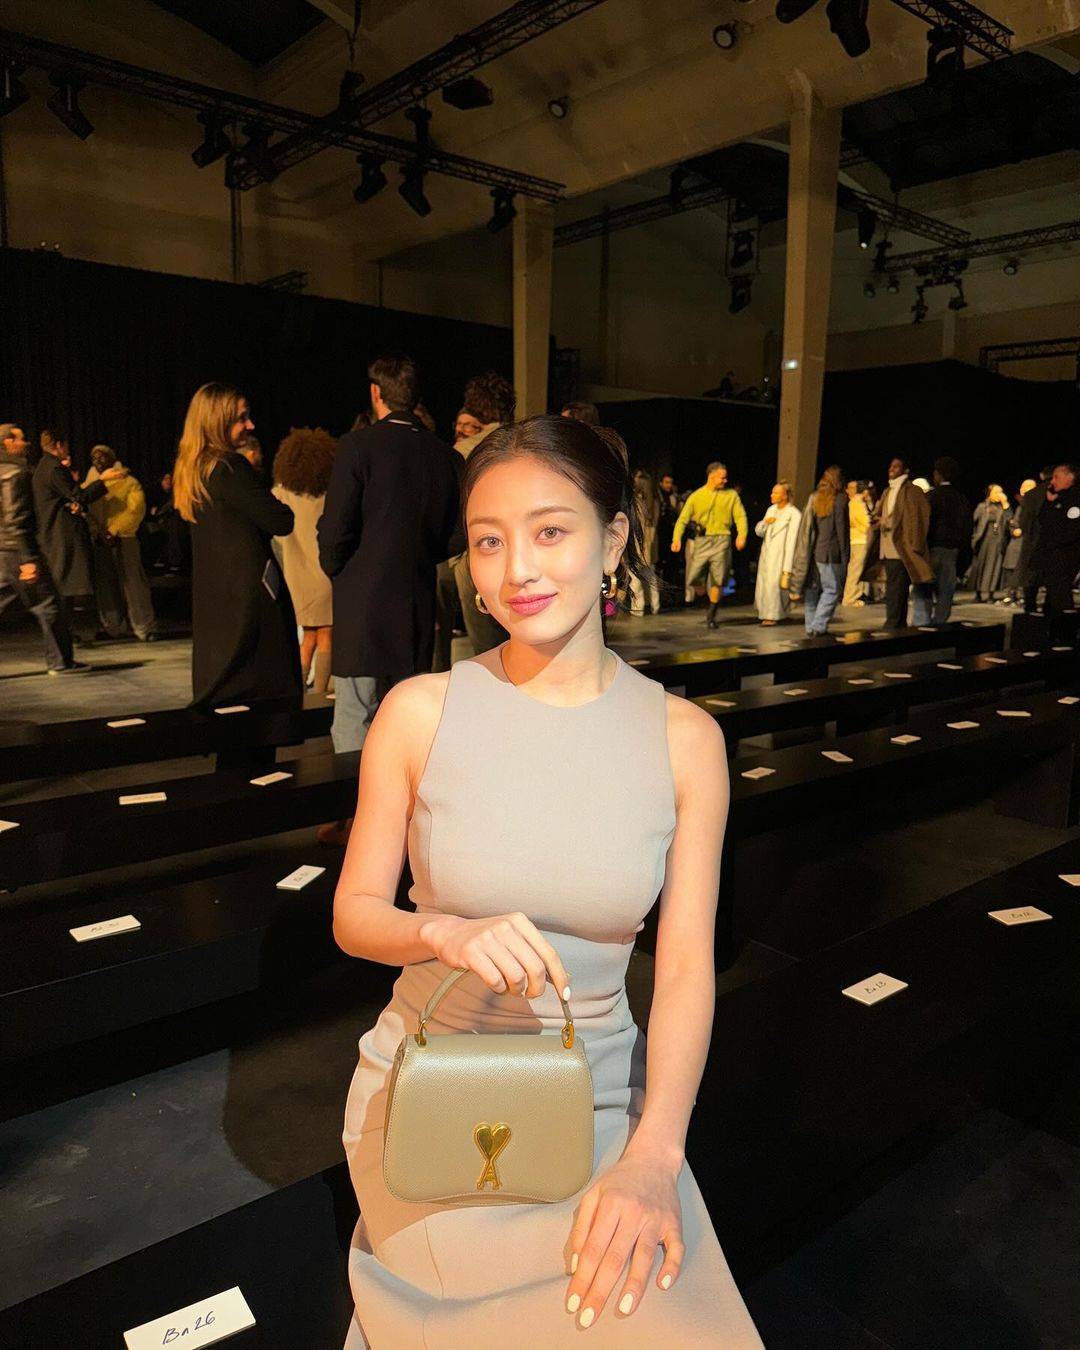 Jihyo of TWICE went to the ami fashion show wearing a gray dress